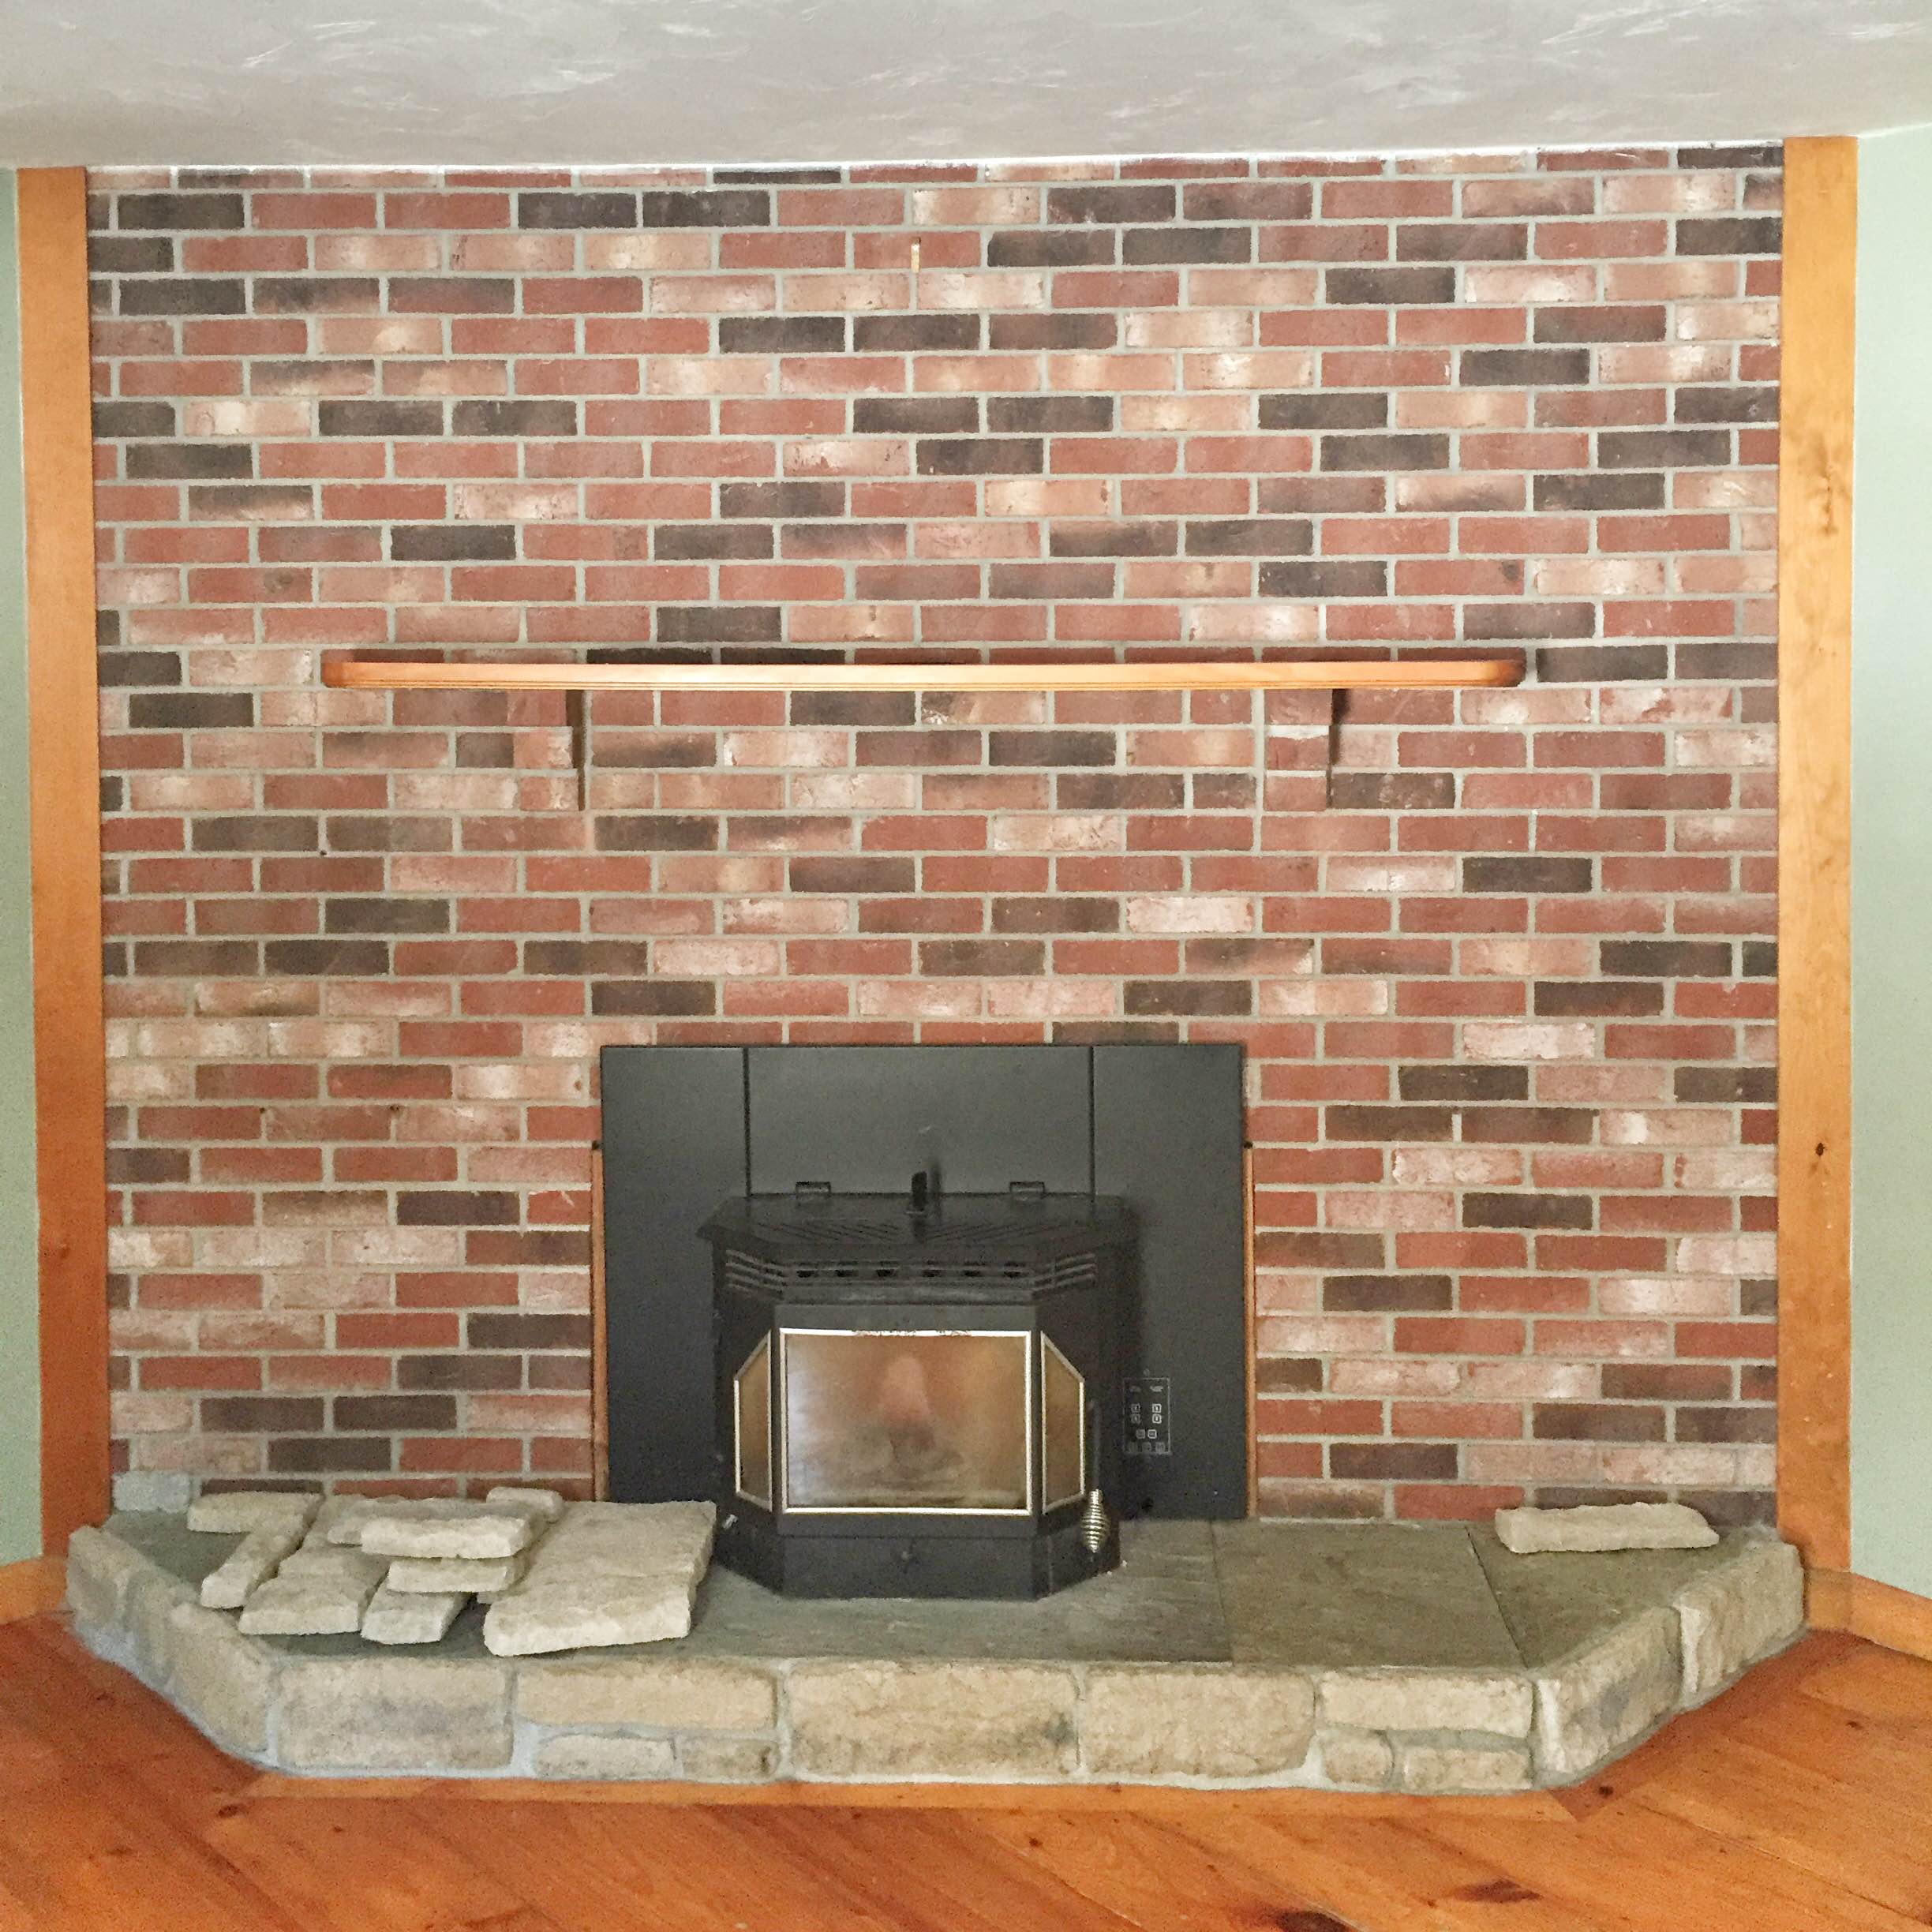 Brick fireplace makeover | Brick to stone veneer fireplace makeover | How to do a stone veneer fire place | GinaKirk.com